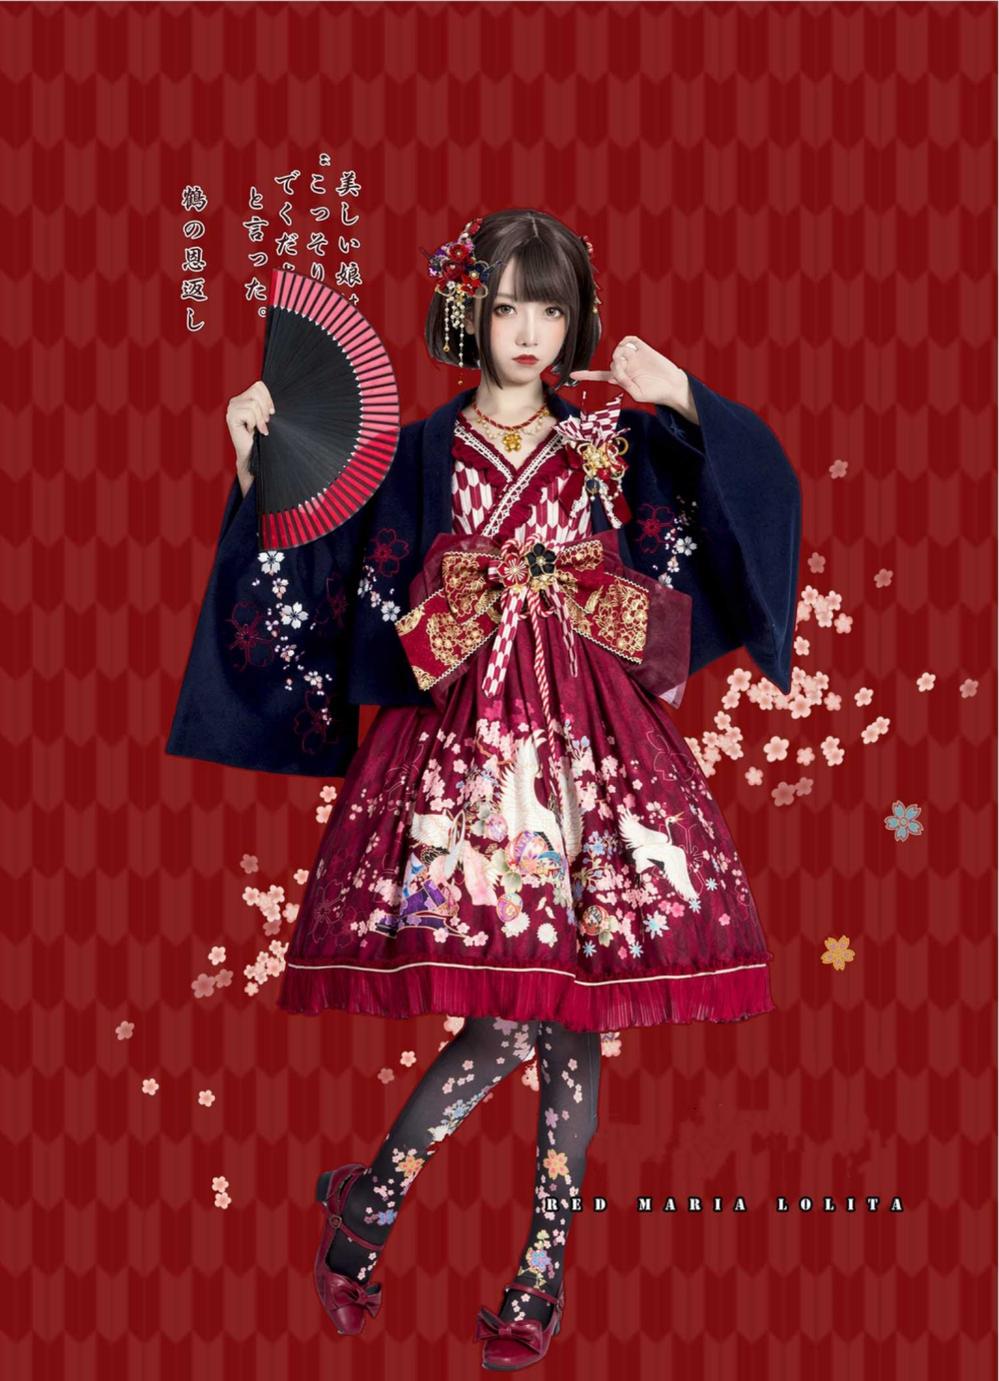 Red Maria~Wa Lolita Coat Red Embroidery Woolen Winter Coat   